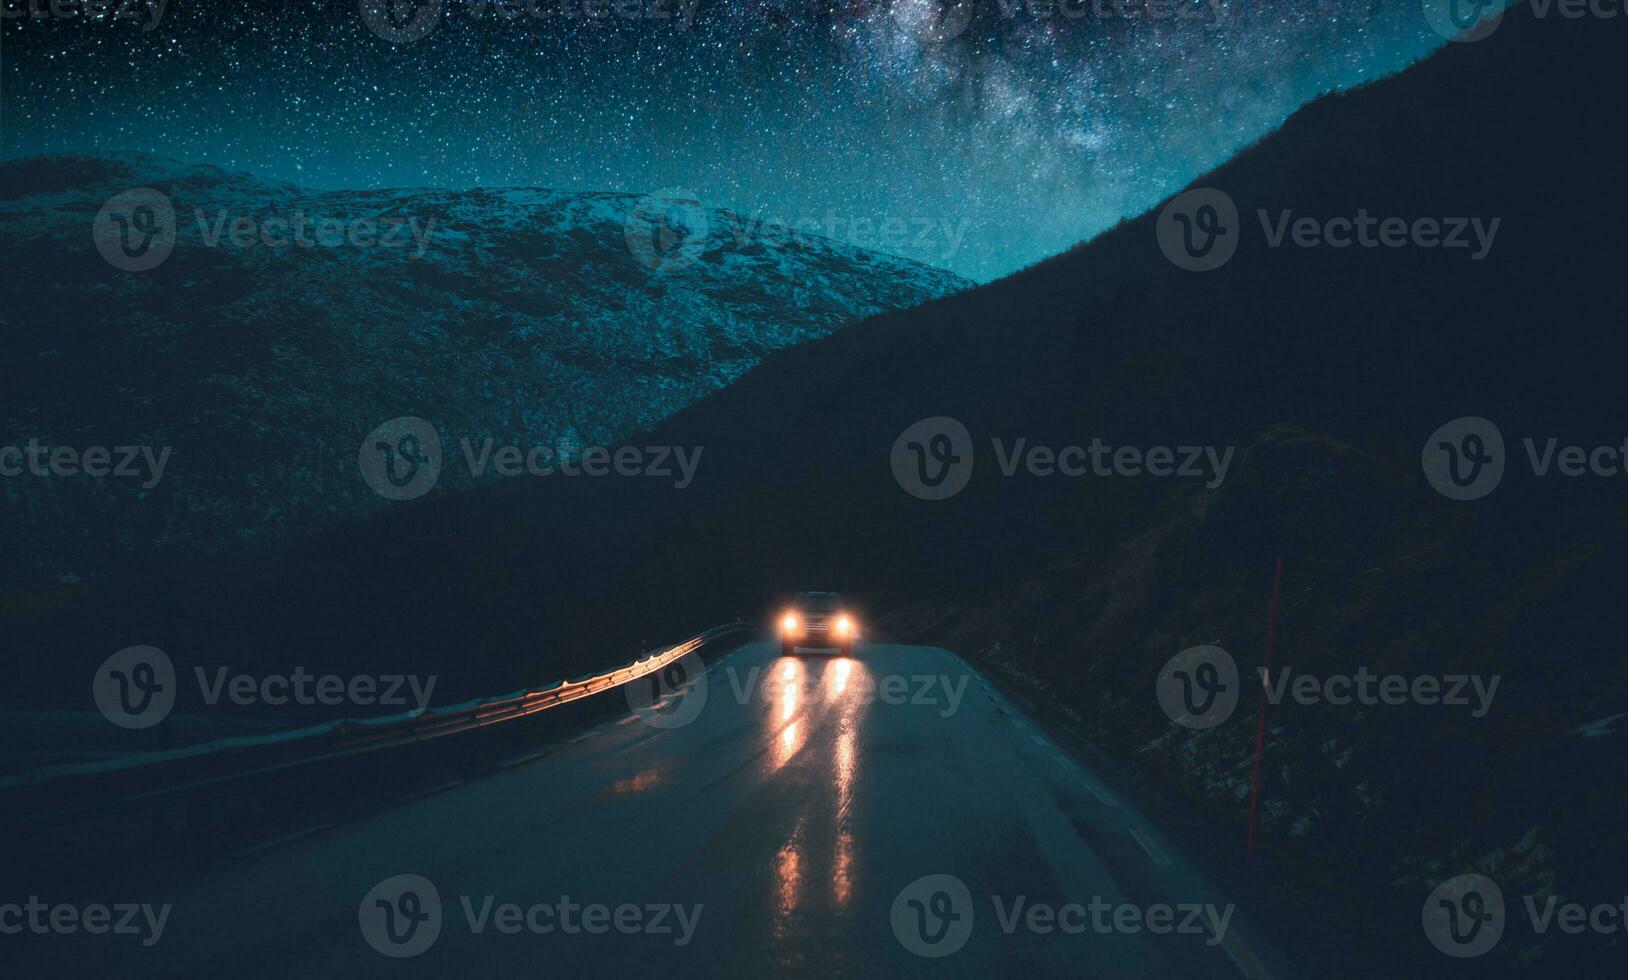 Norway adventures, nighttime road trip photo